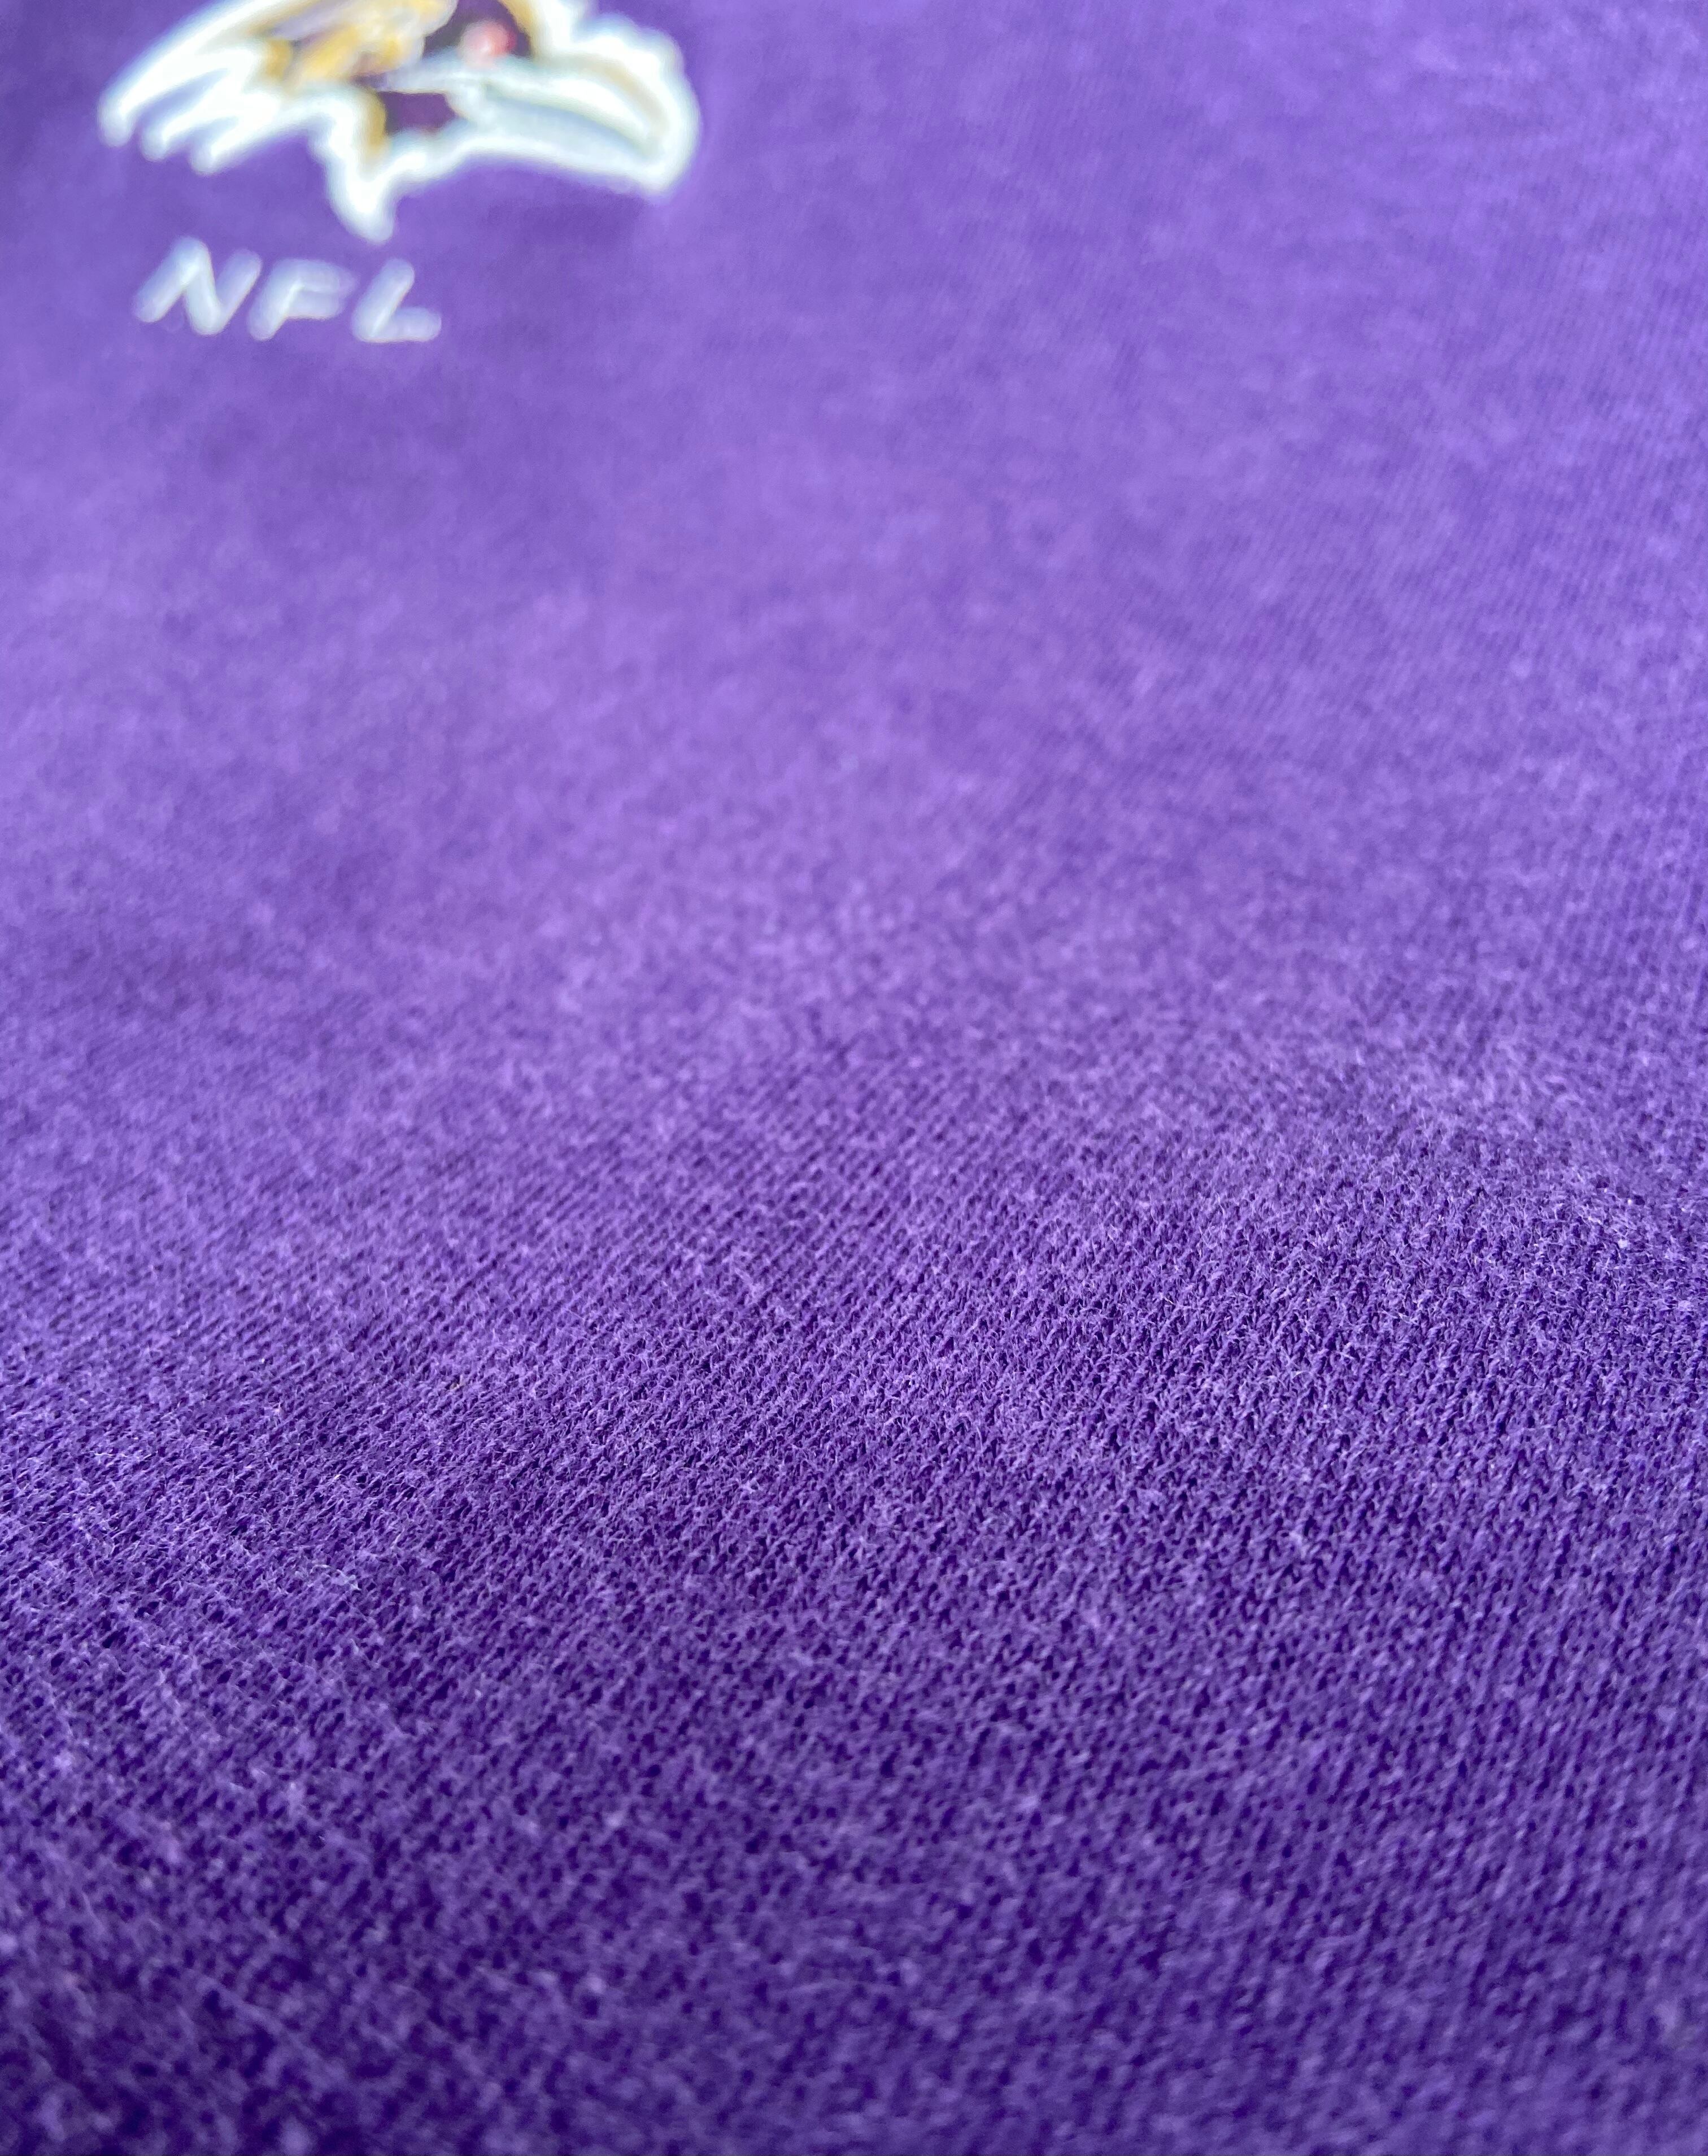 USA製 NFL レイブンズ RAVENS 紫 スウェット 刺繍ロゴ | 【古着 らく 